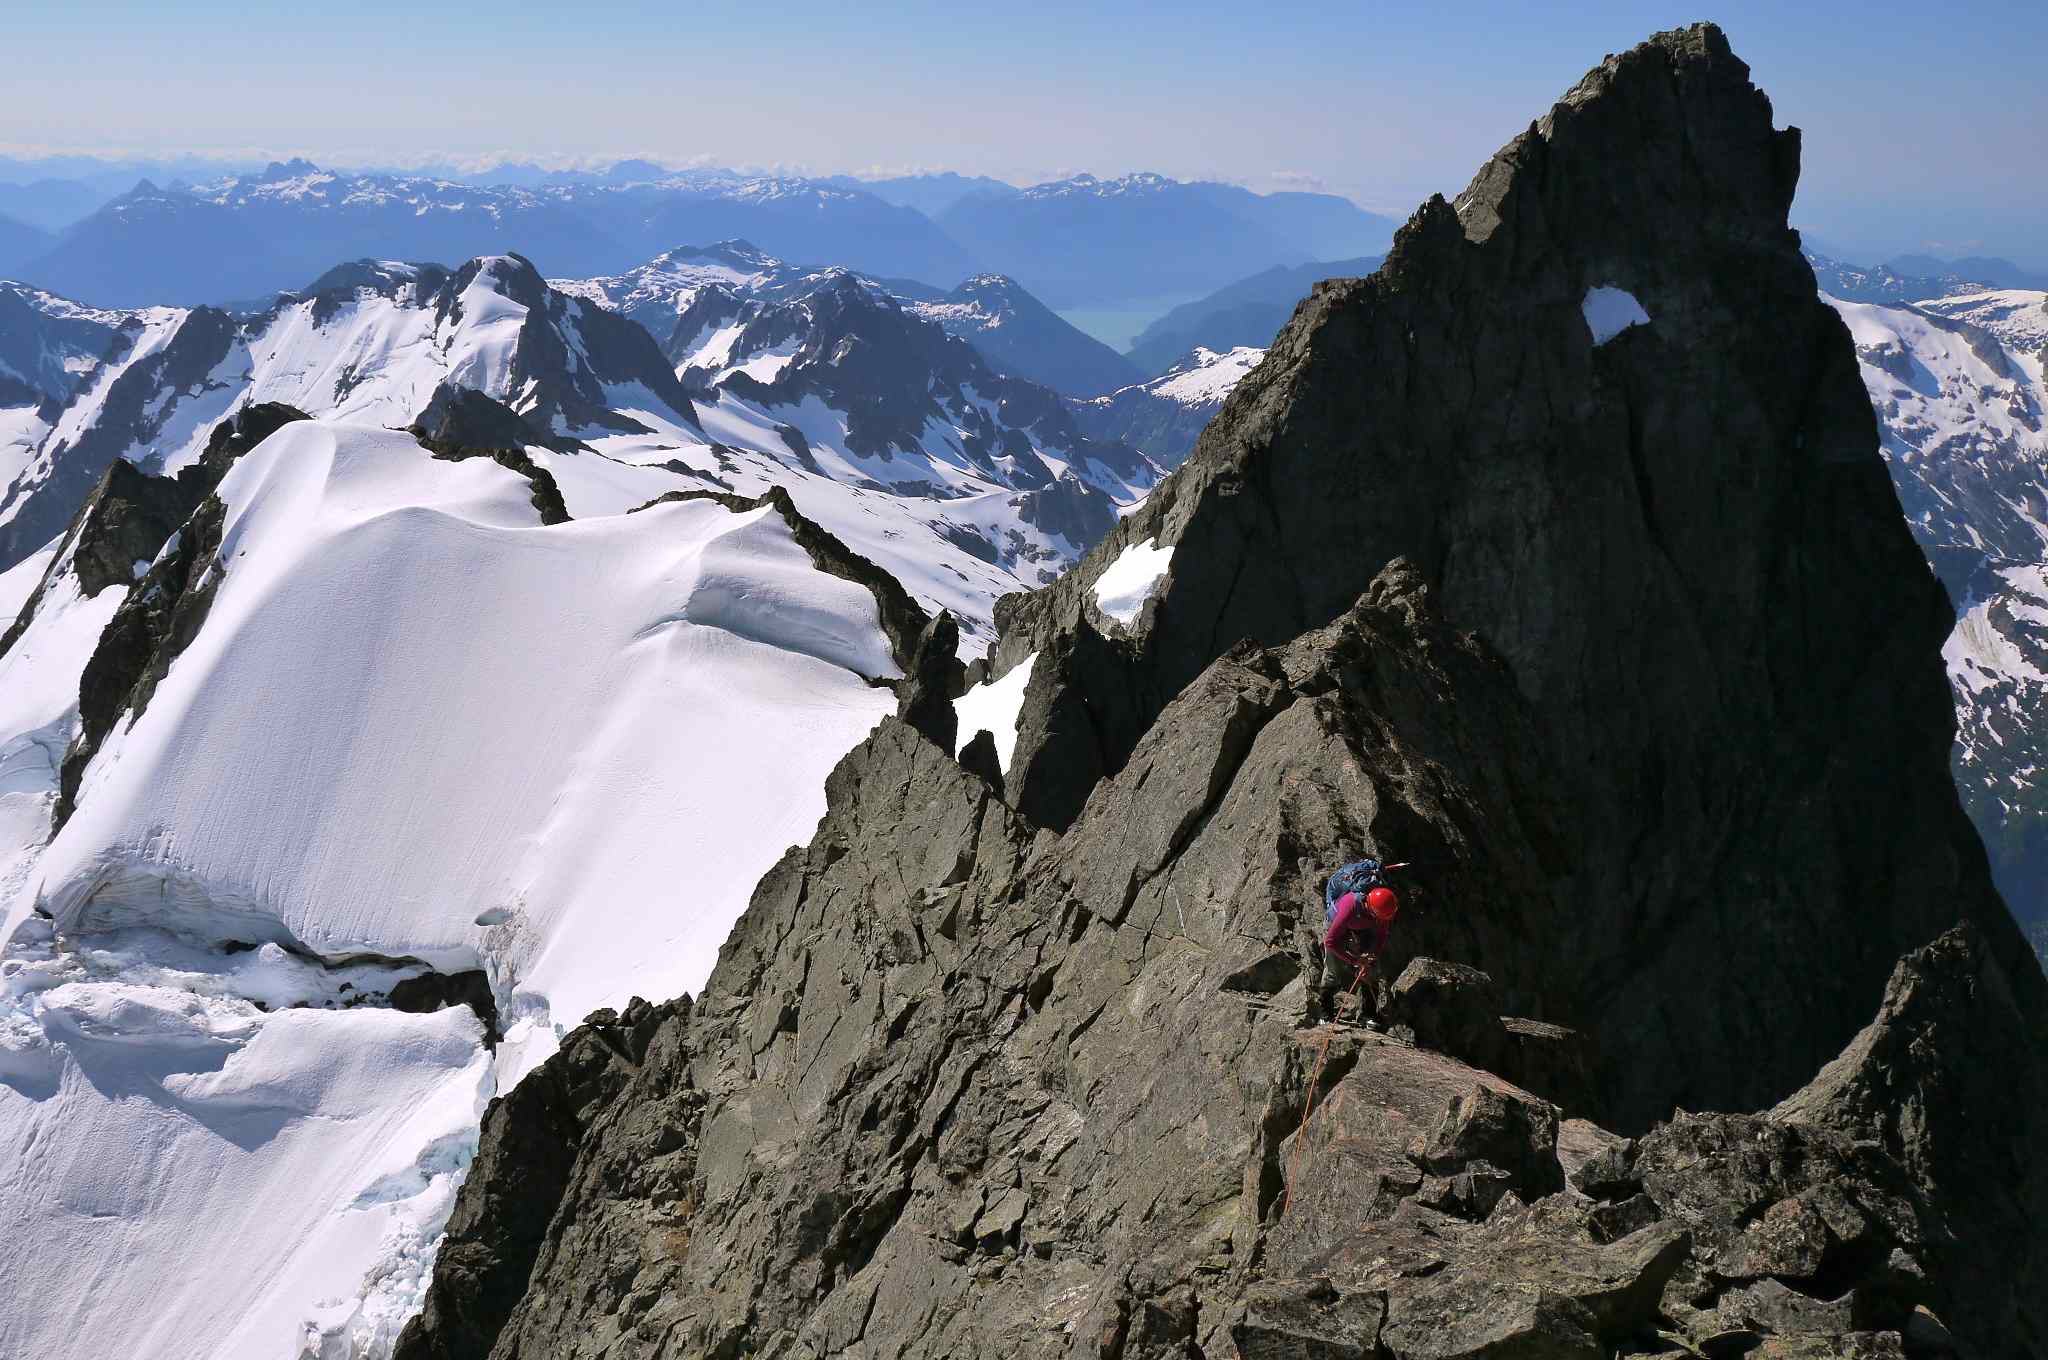 Summit ridge of Tantalus